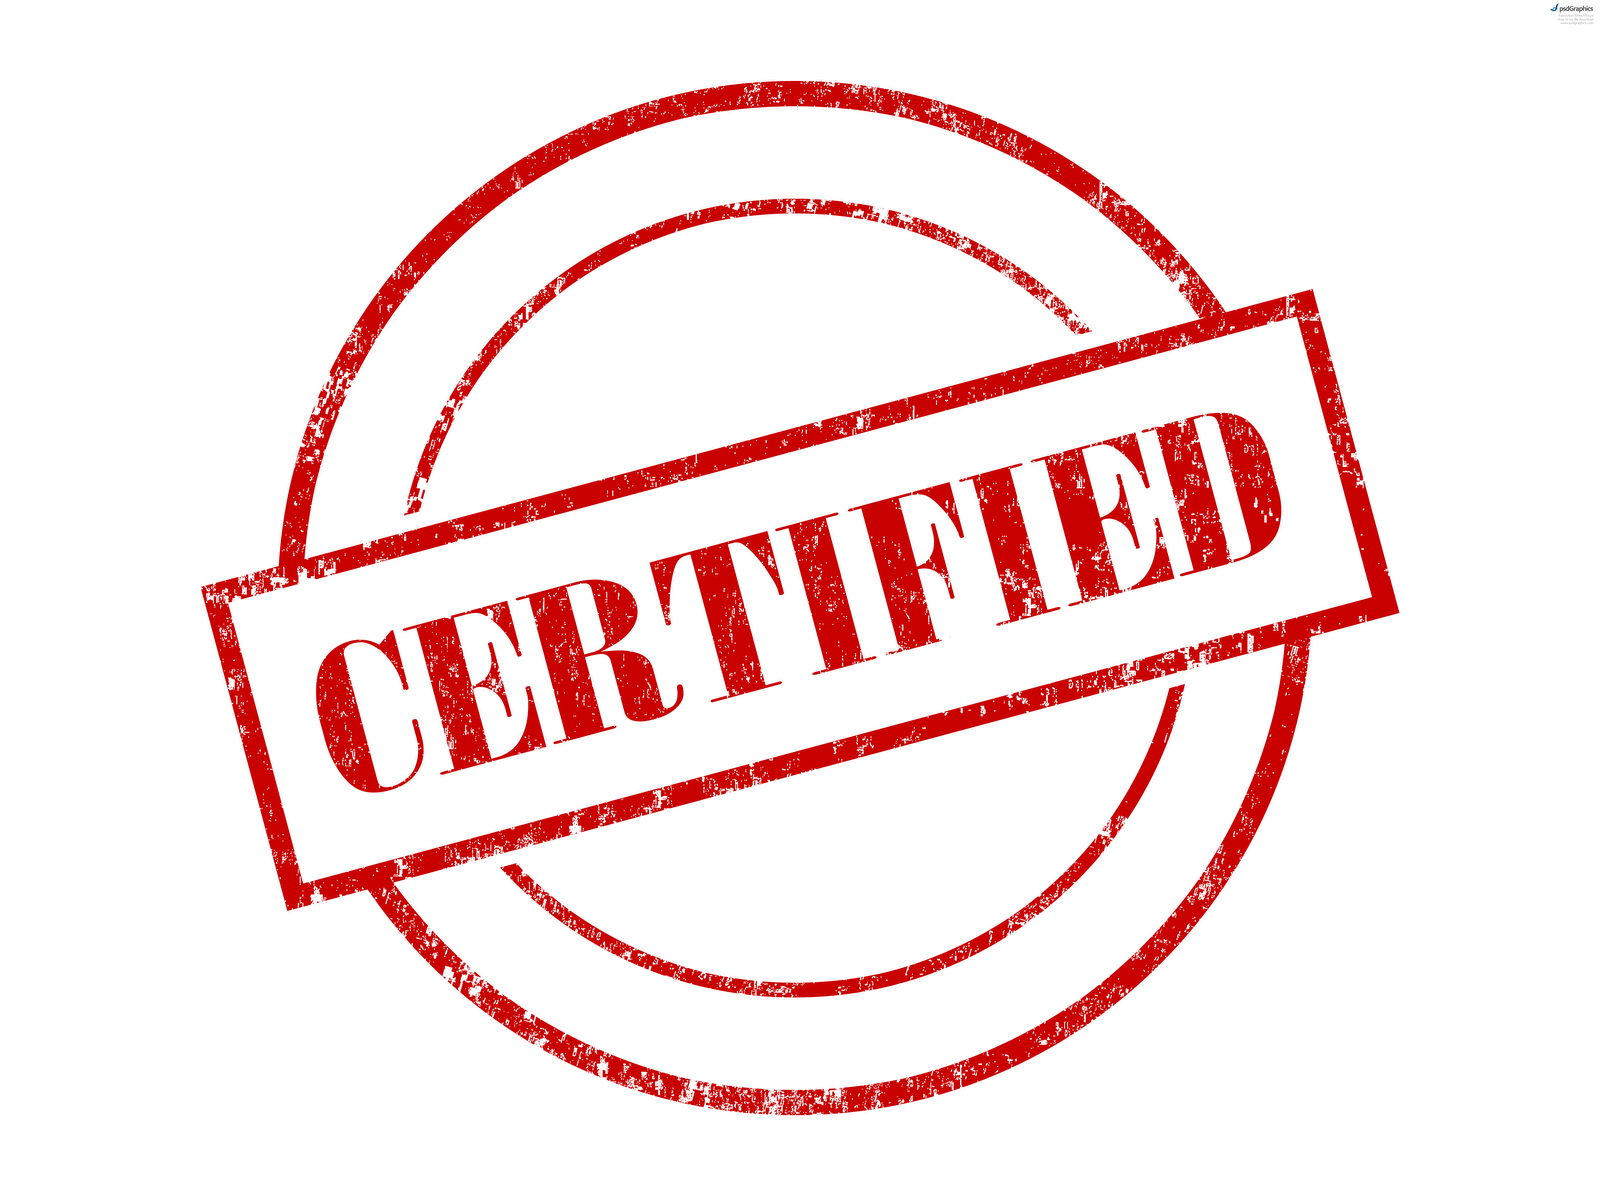 Daedalus Technical Solutions: Certifications Matter